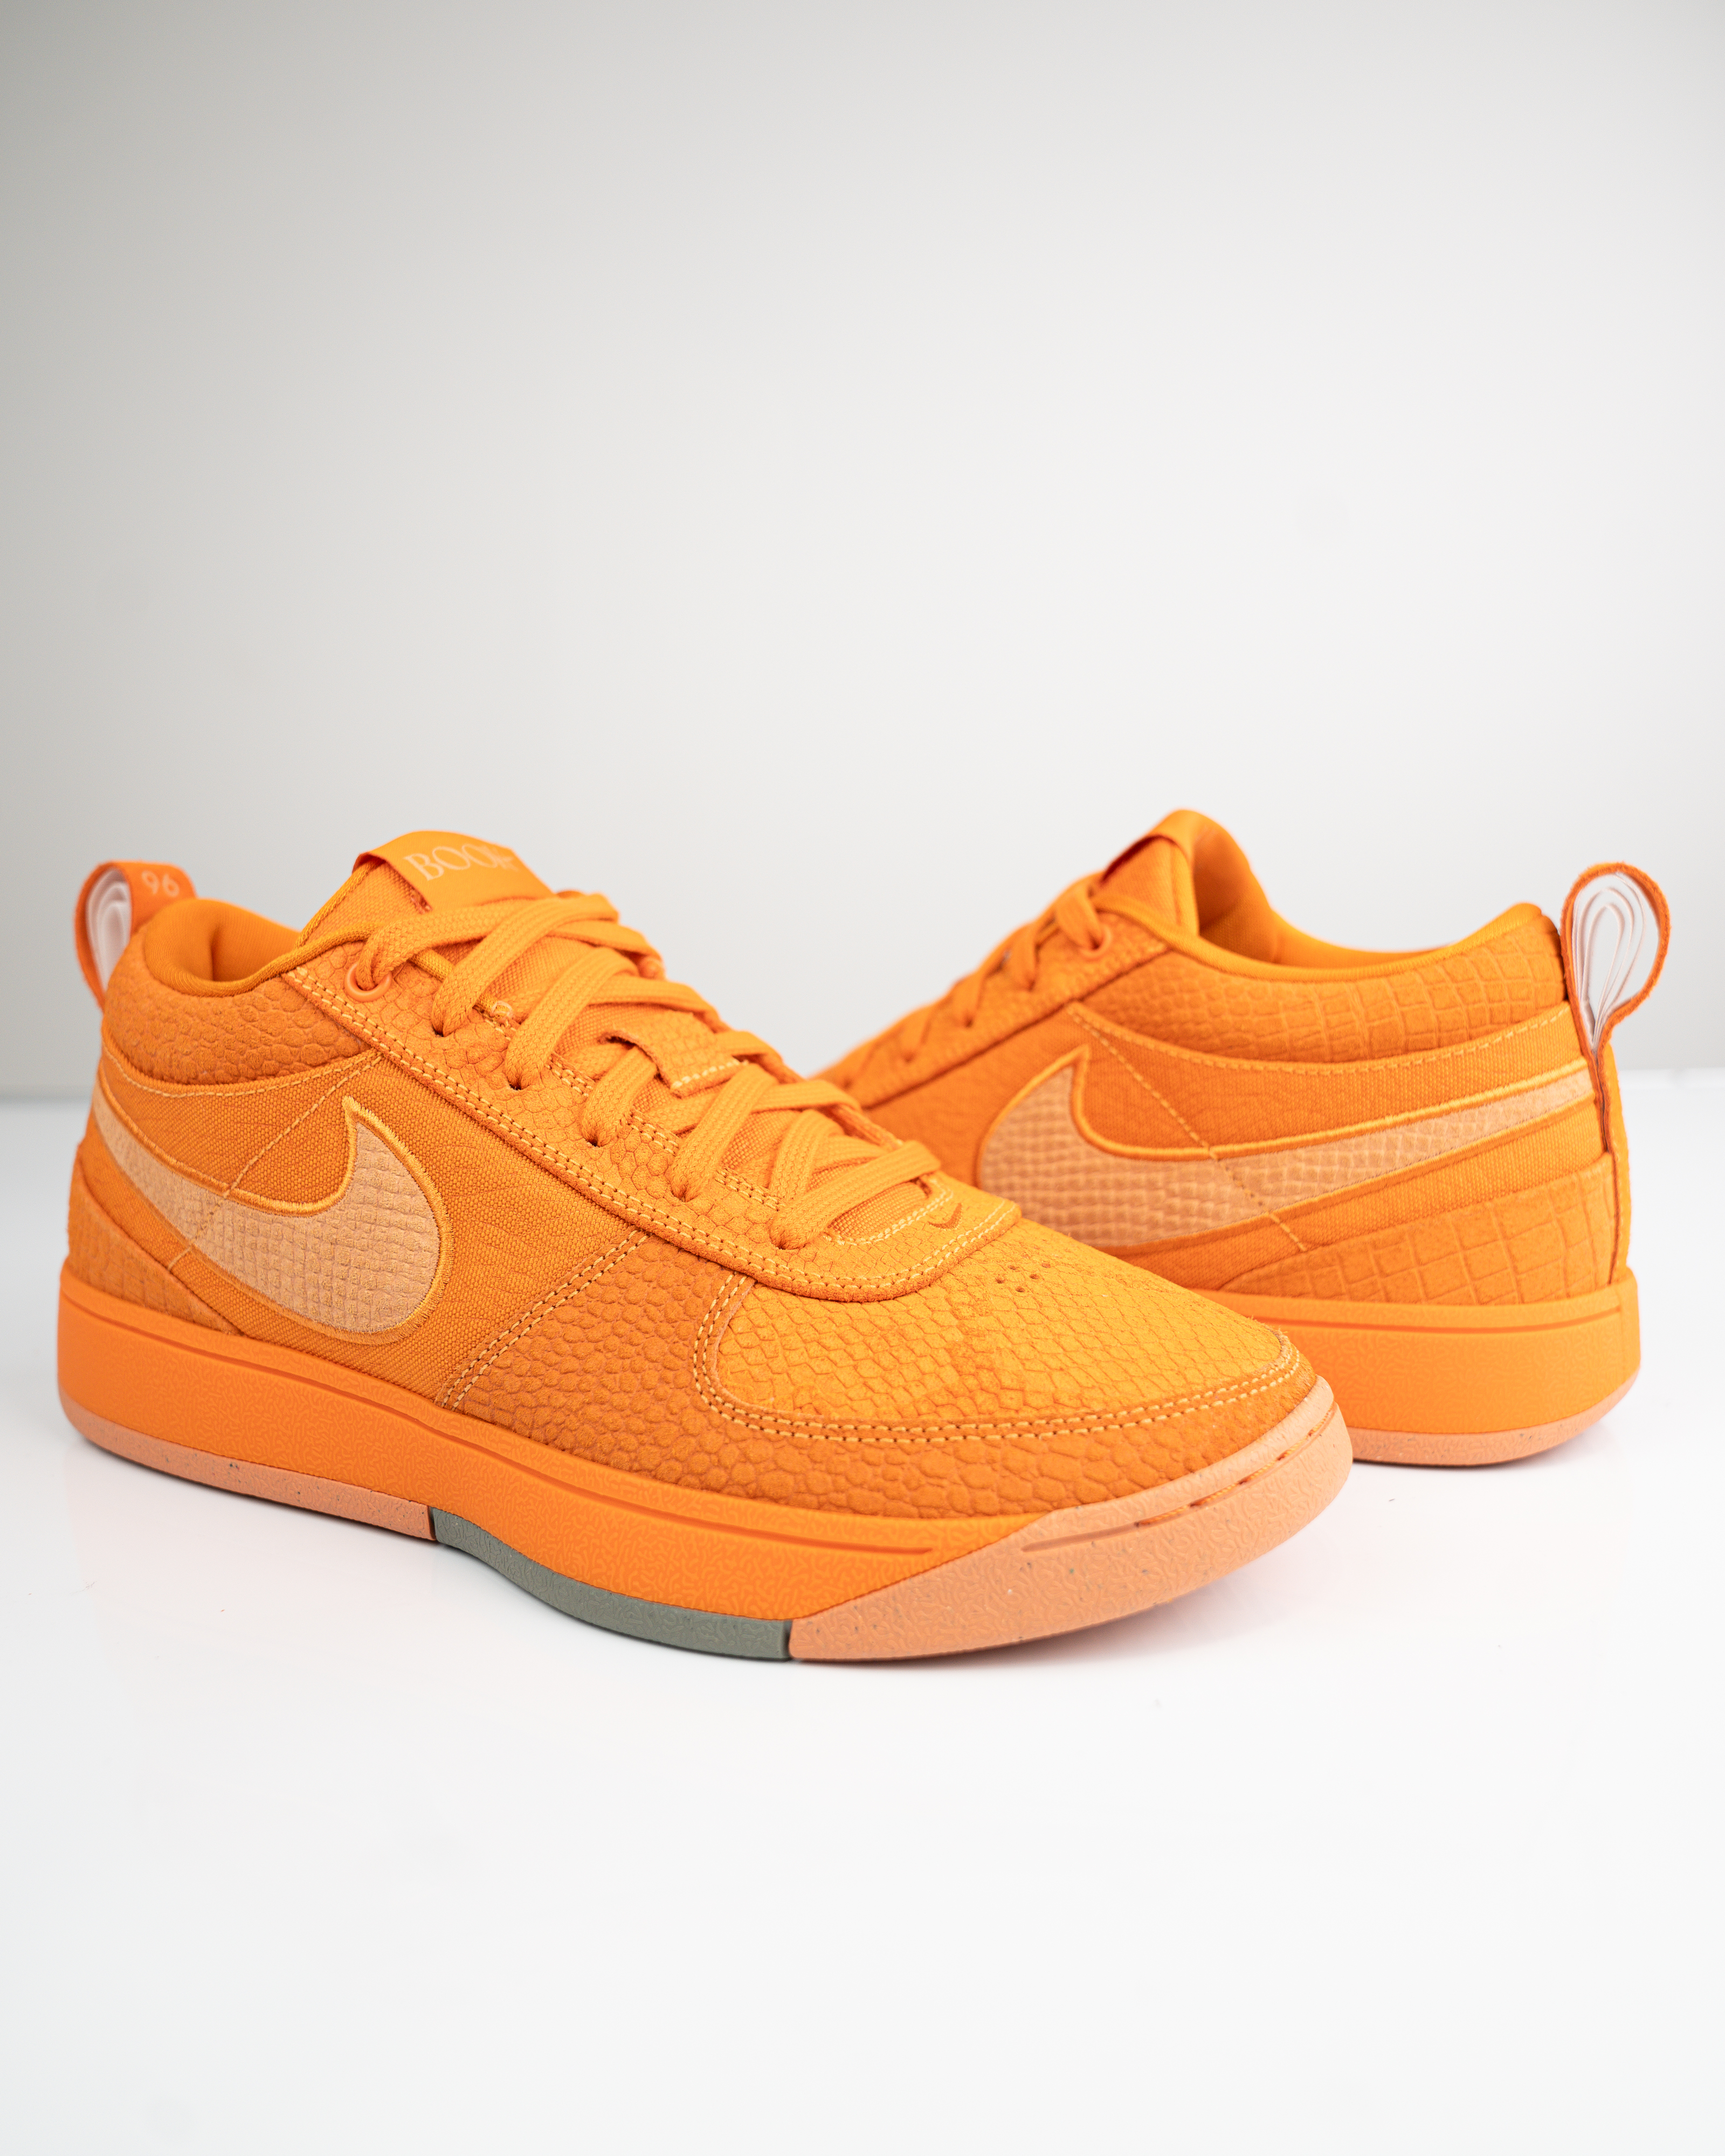 Ja Morant Nike Signature Shoe 2023 Info